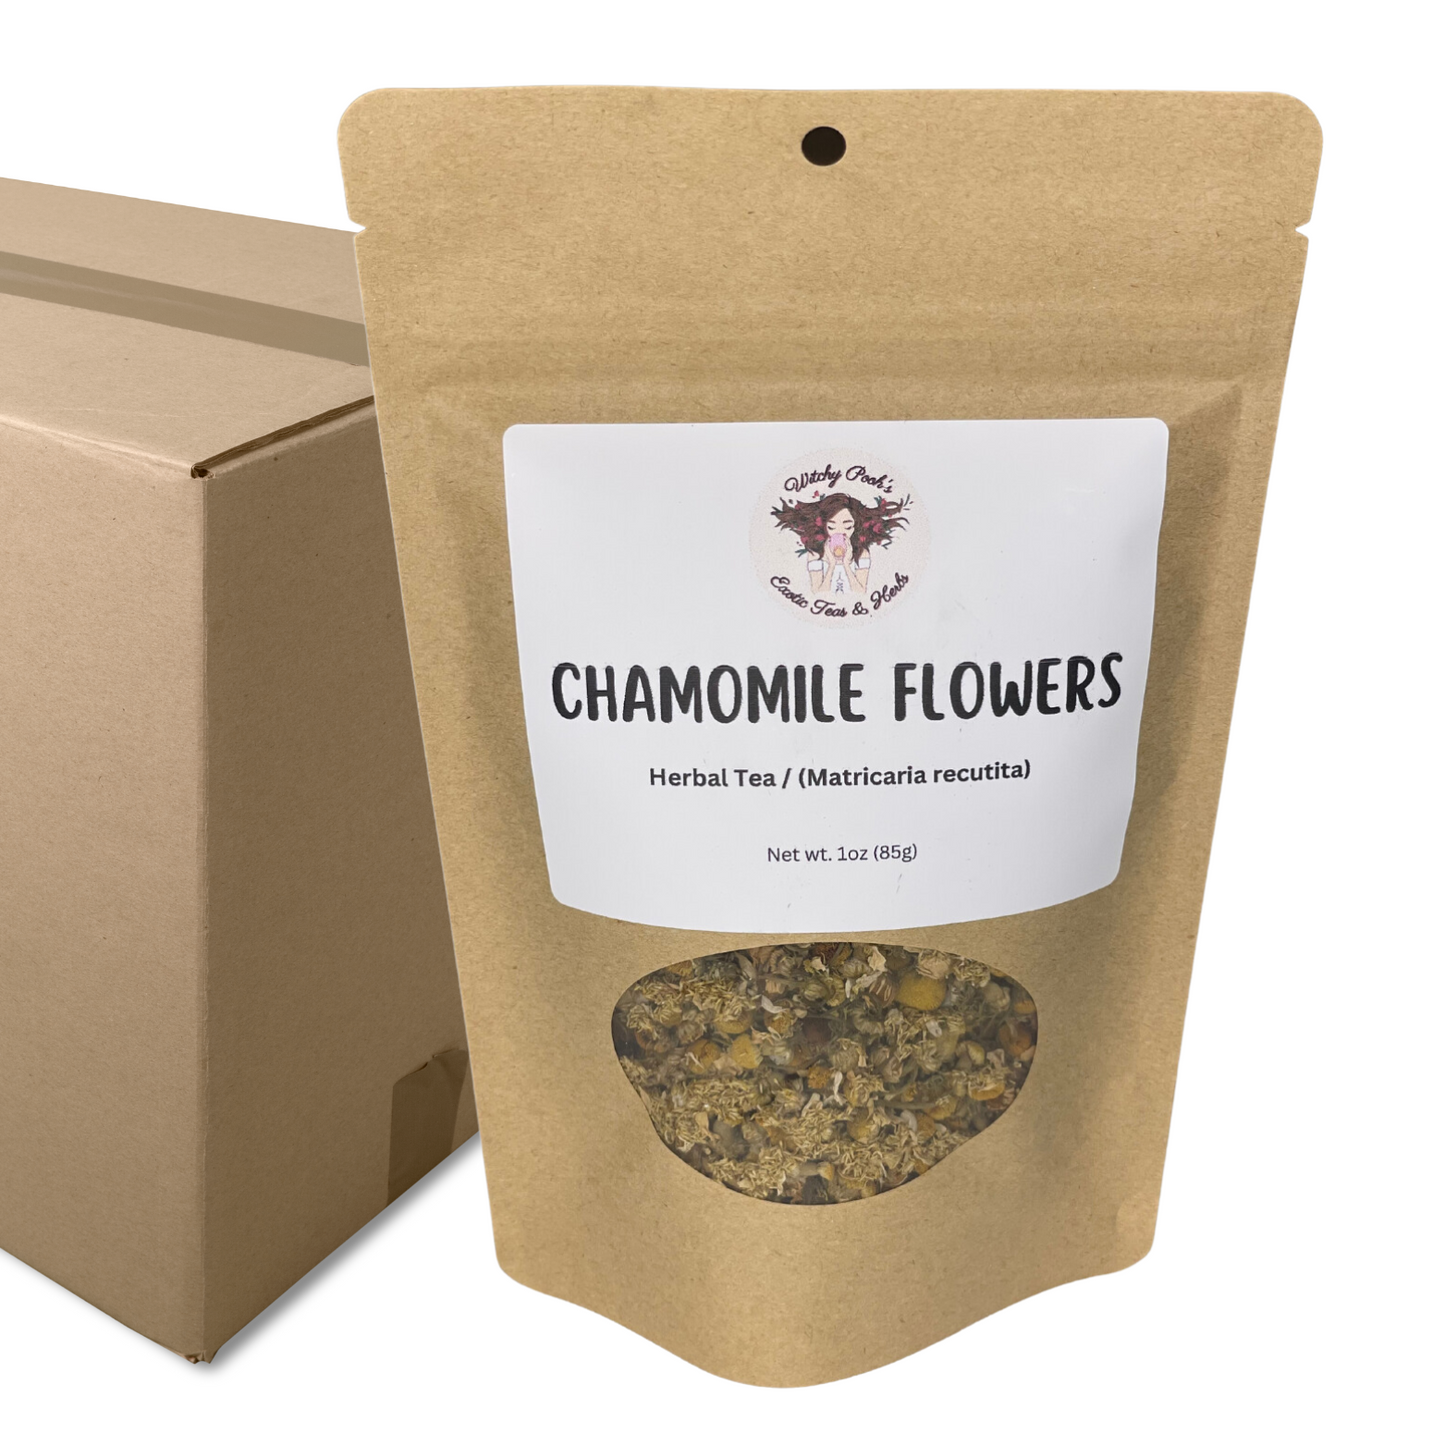 Chamomile Flowers Loose Leaf Herbal Tea, Caffeine Free, For Stress Relief and Sleep Aid